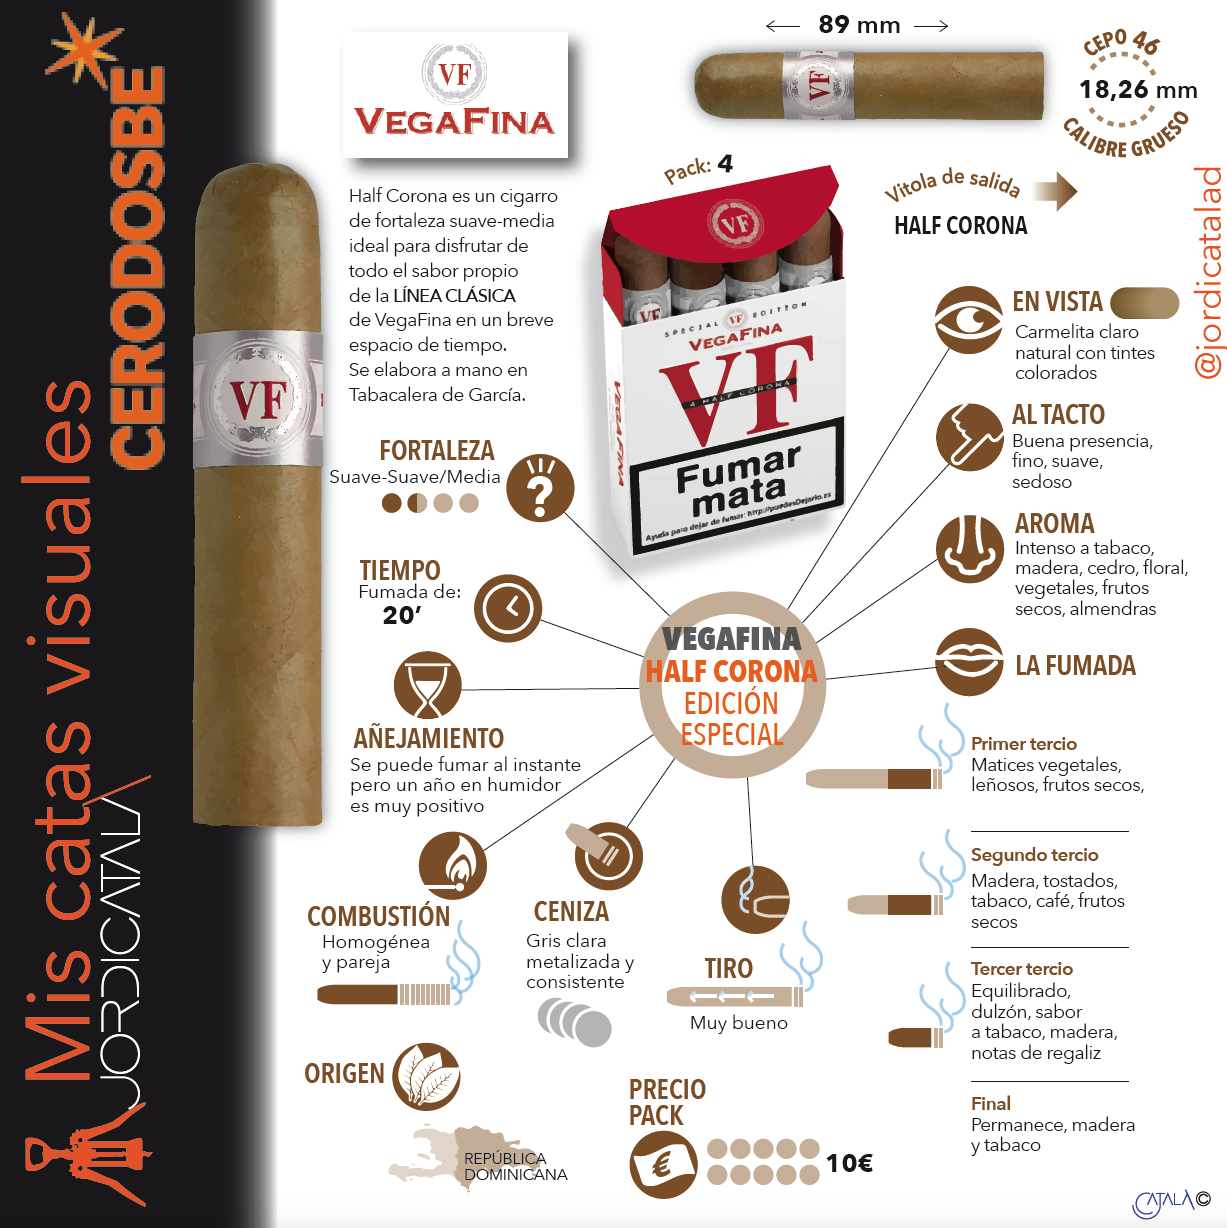 El cigarro VegaFina Half Corona estrena formato de presentaciÃ³n. Ilustraciones e infografÃ­as: Jordi CatalÃ 